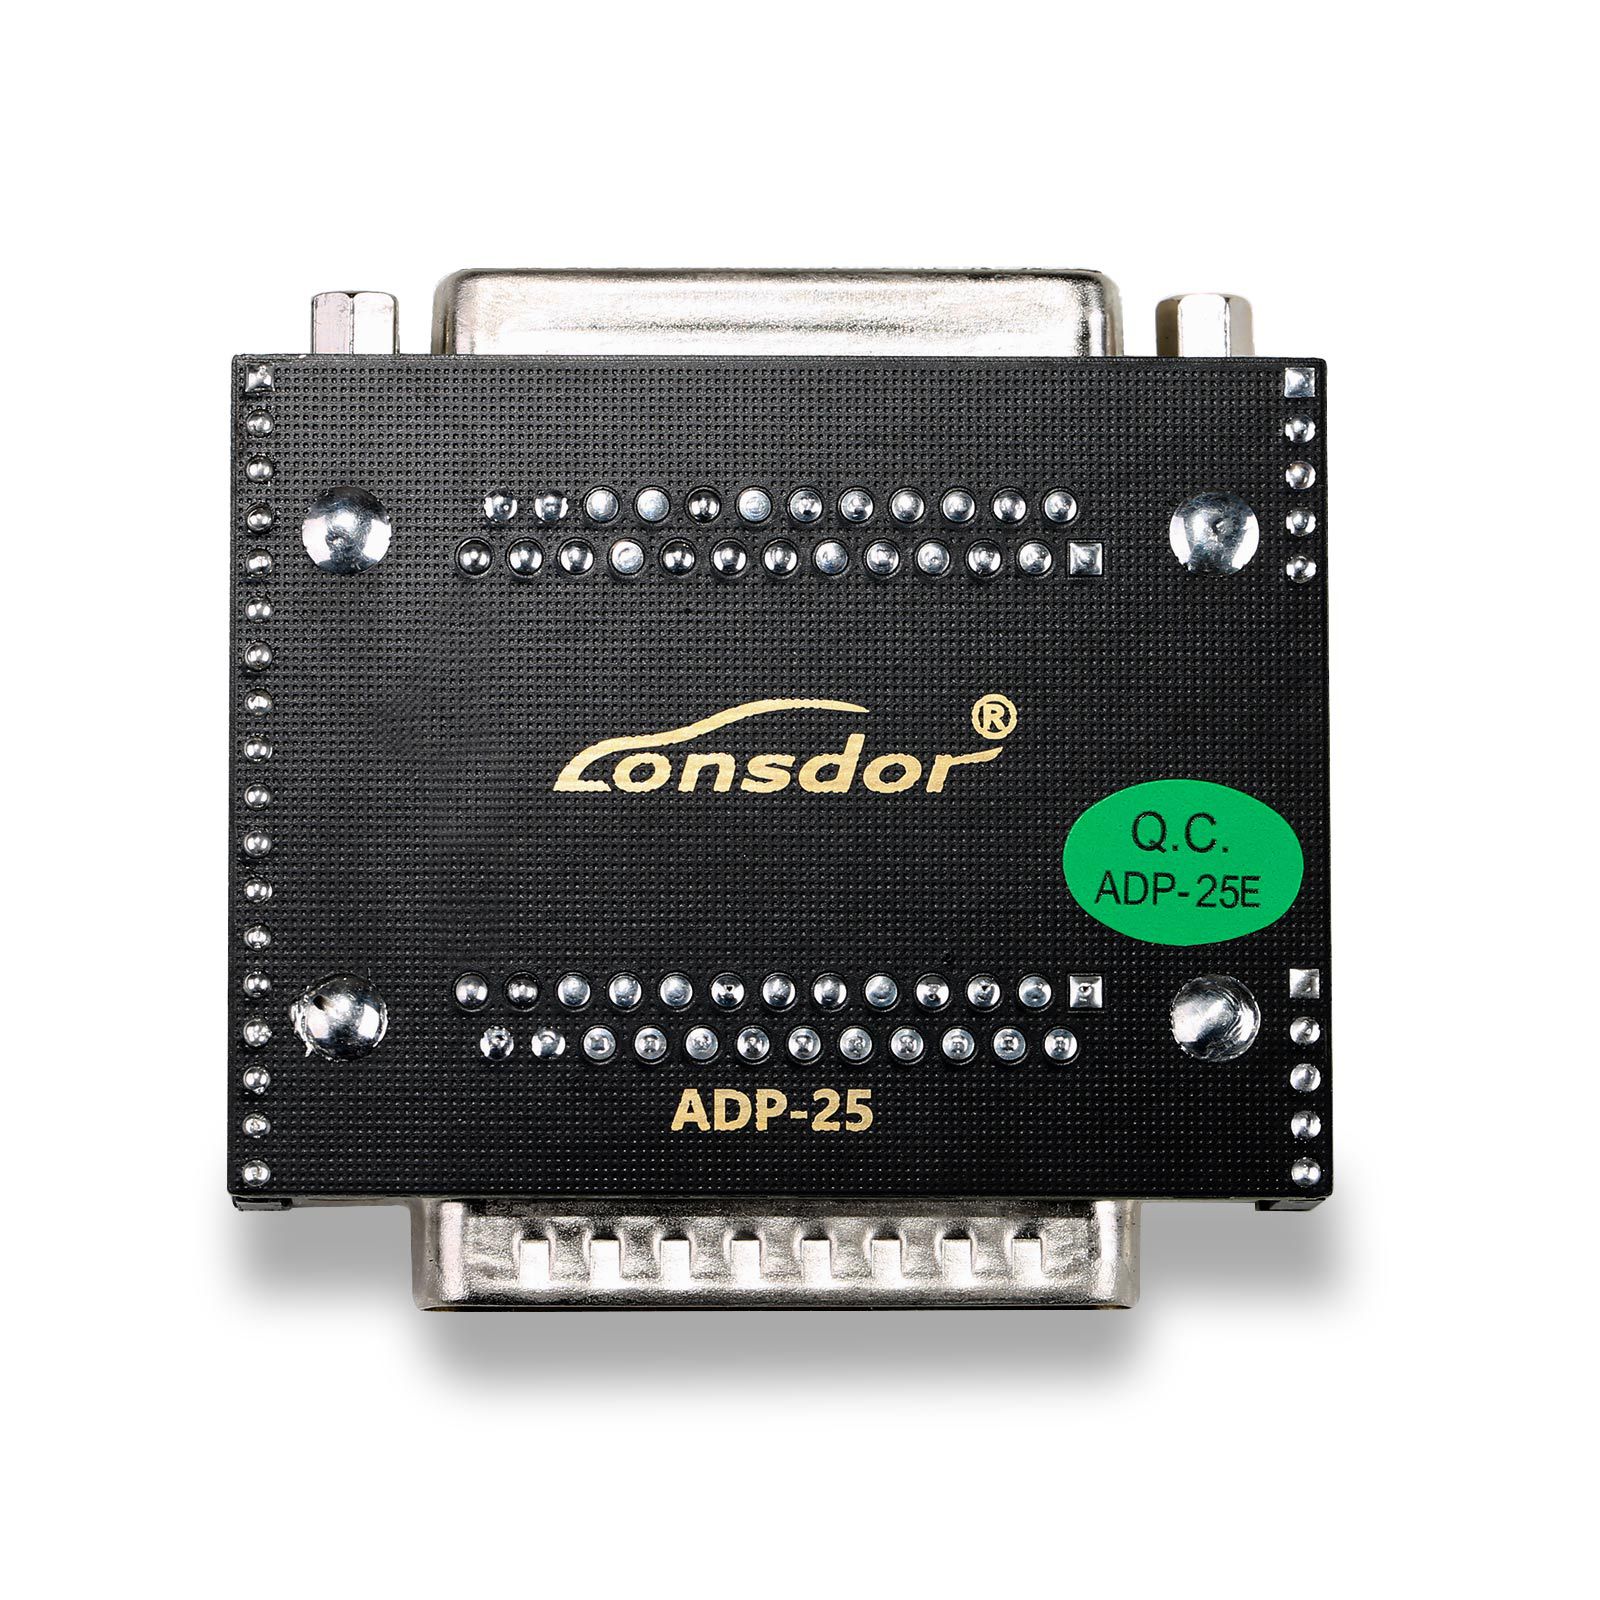 Lonsdor Super ADP 8A/4A 어댑터 + Lonsdor-LKE 스마트 키 시뮬레이터 5-in-1 및 Lonsdor K518ISE K518S